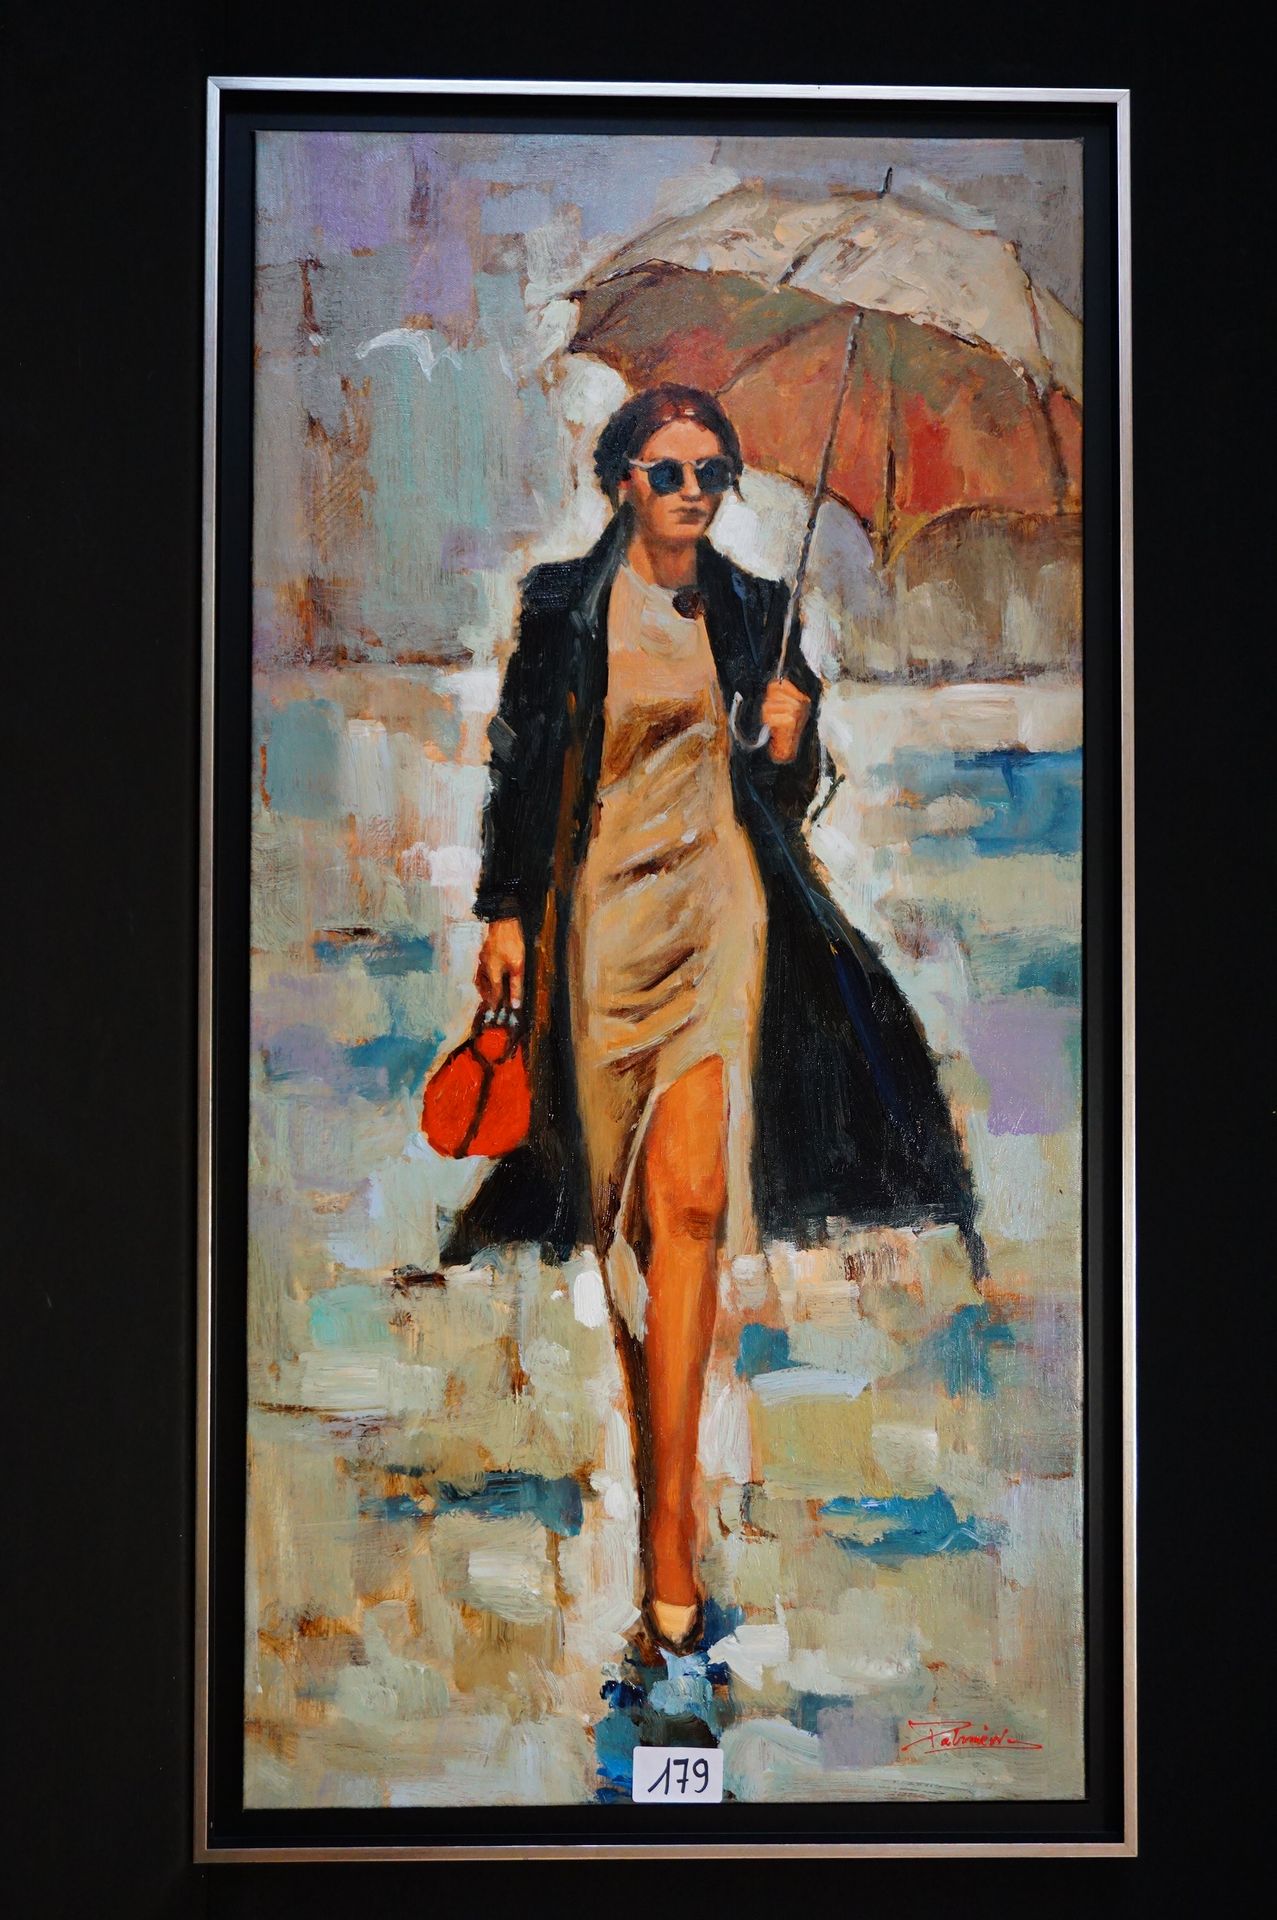 ANTONIO PALMIERI (1946 - ) "撑伞的年轻女人" - 布面油画 - 已签名 - 120 x 60 cm